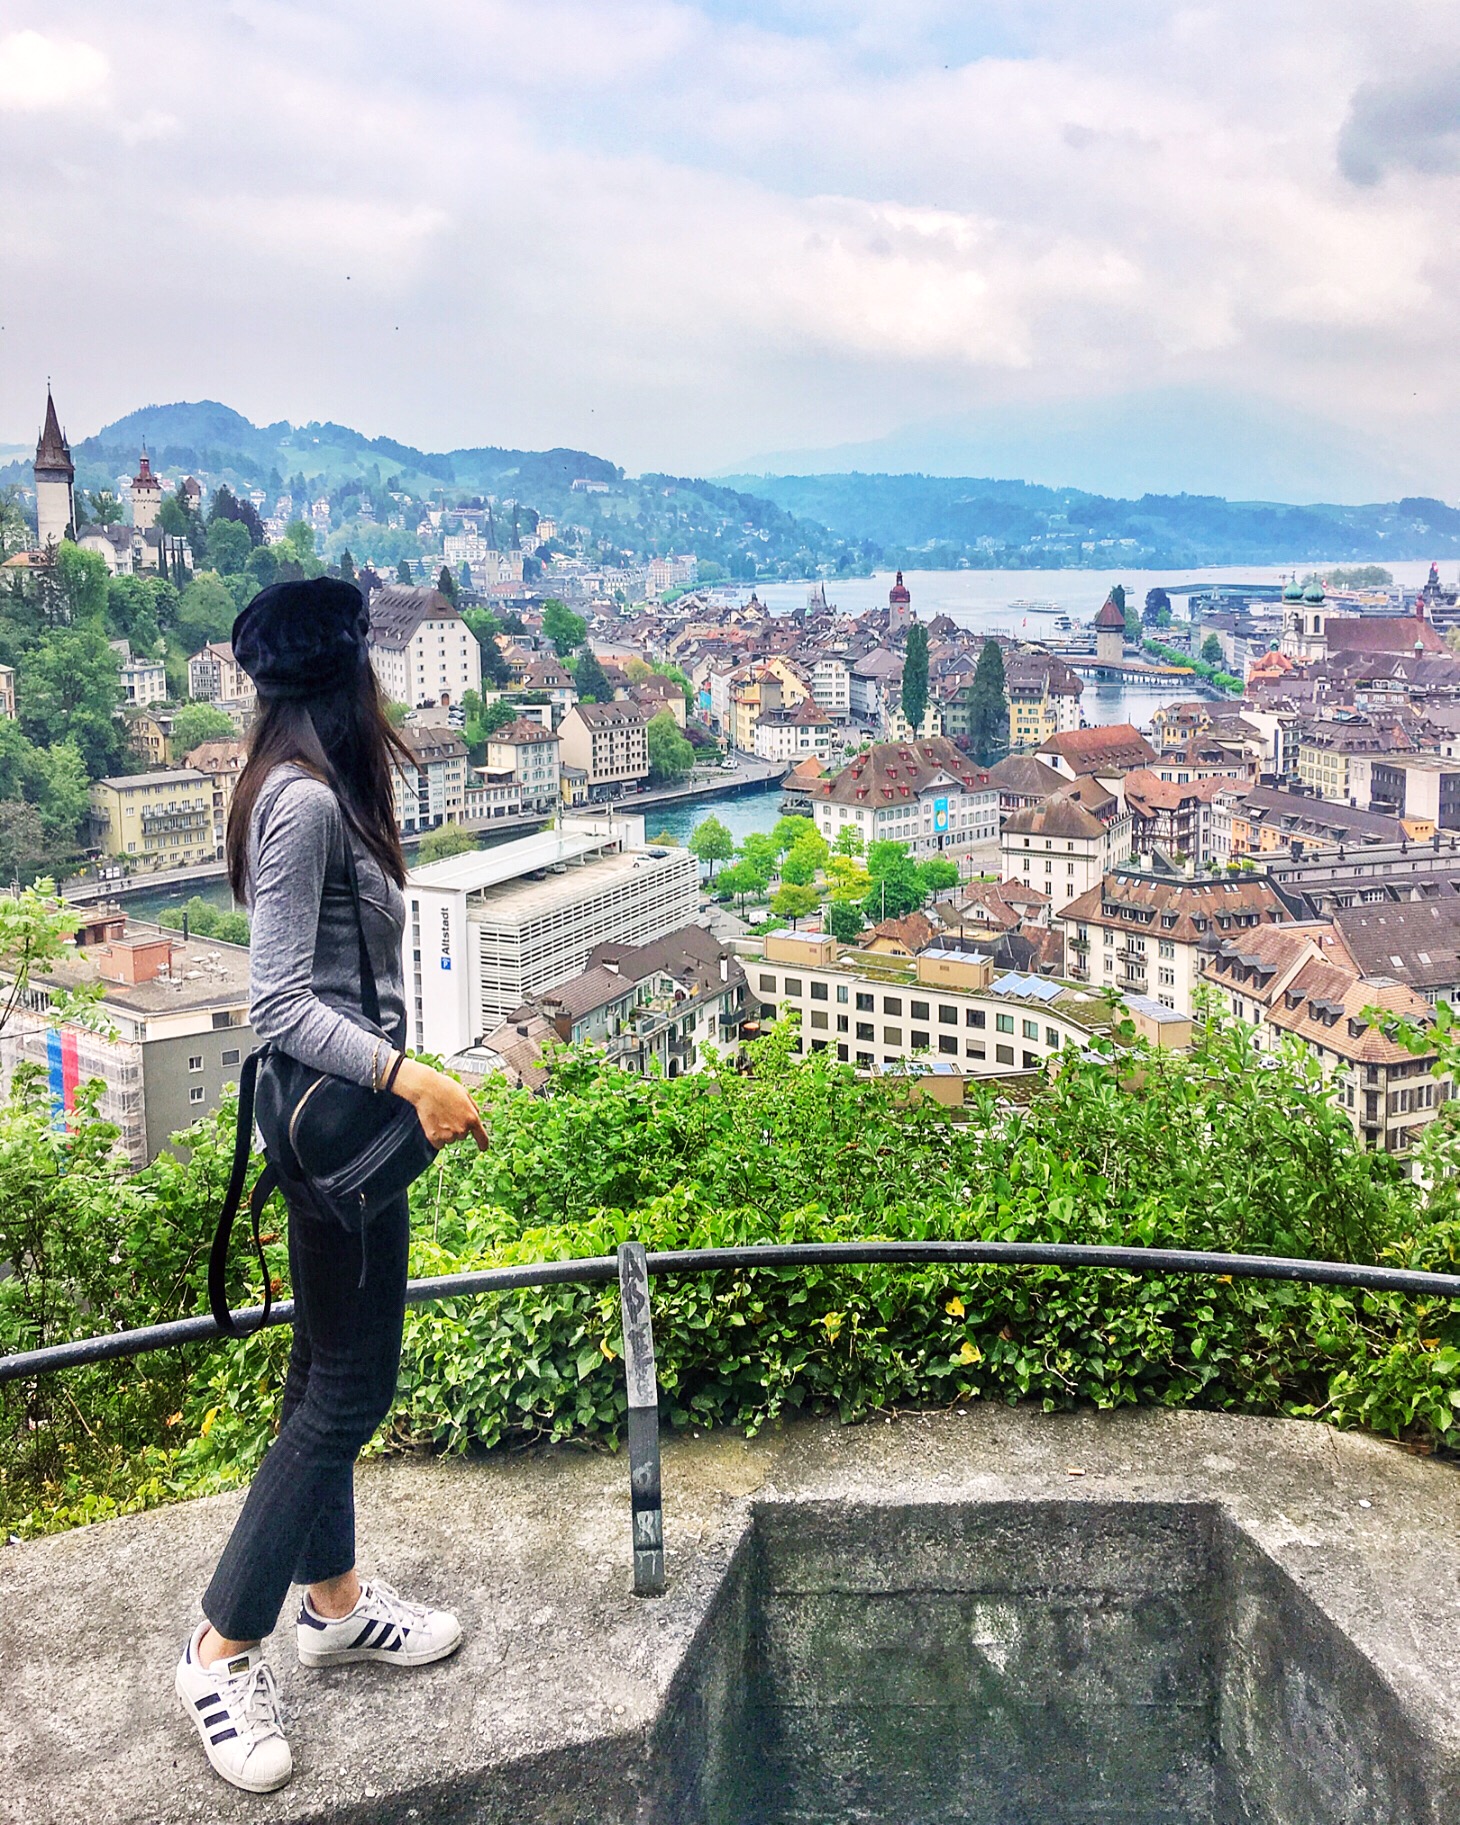 Views overlooking Lucerne